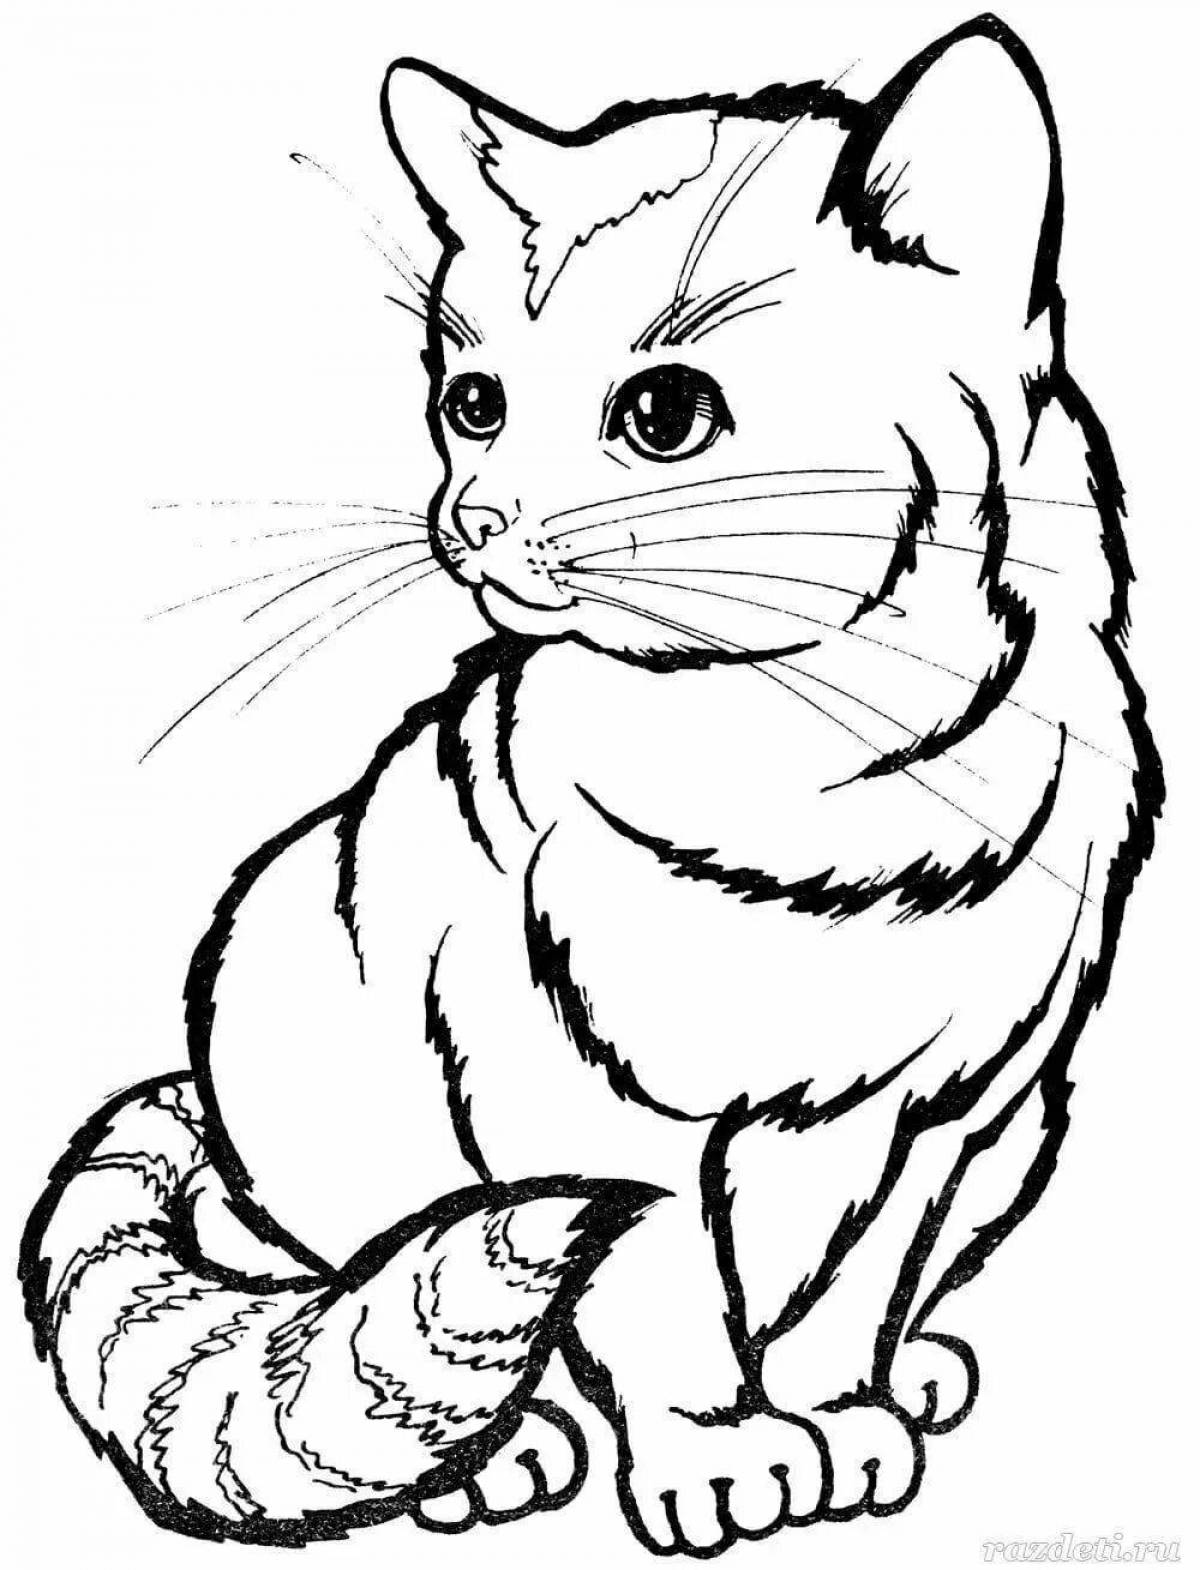 Загадочная раскраска рисунок кота